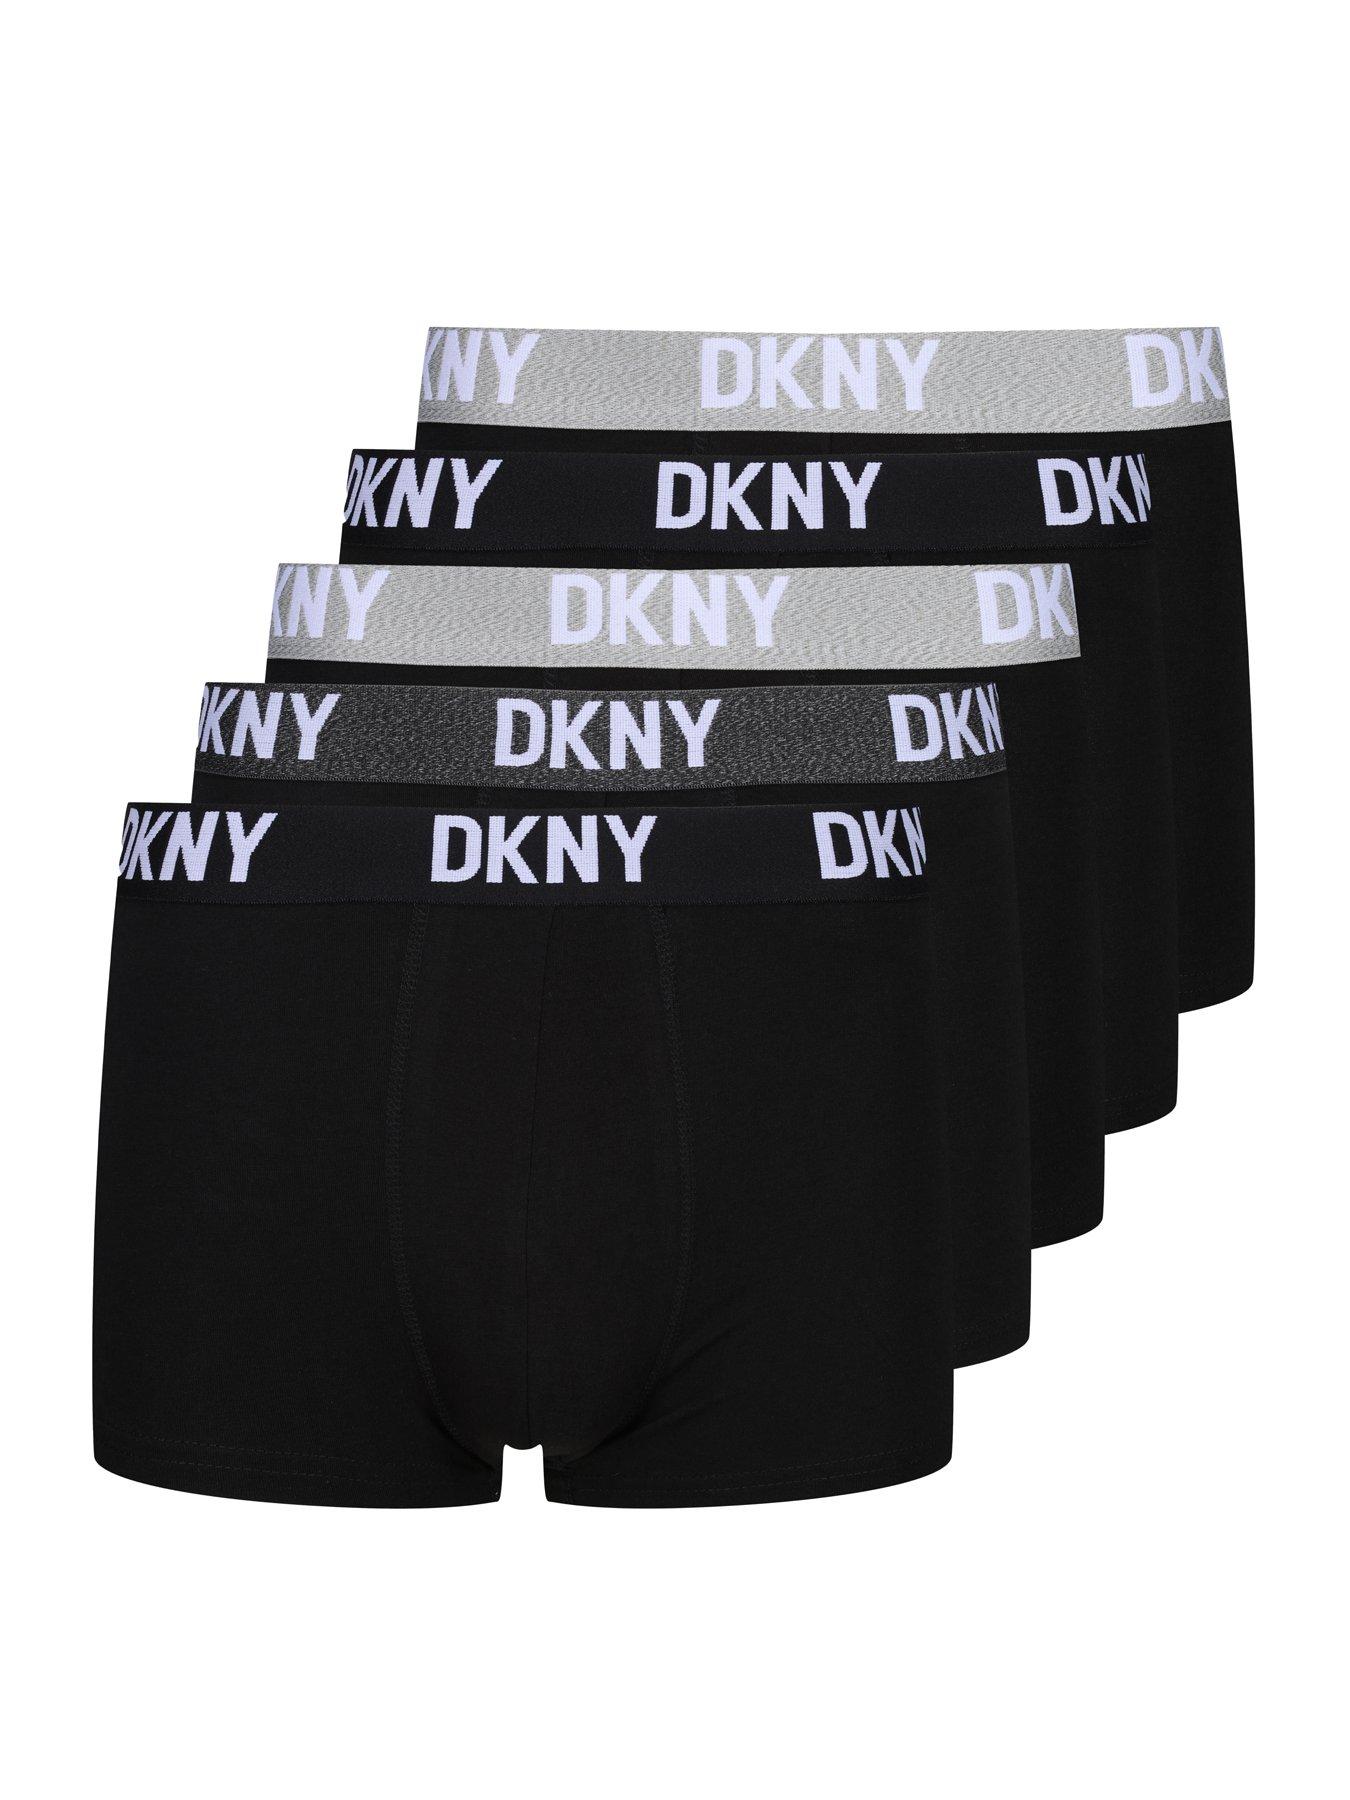 DKNY 5 Pack Portland Trunks - Multi